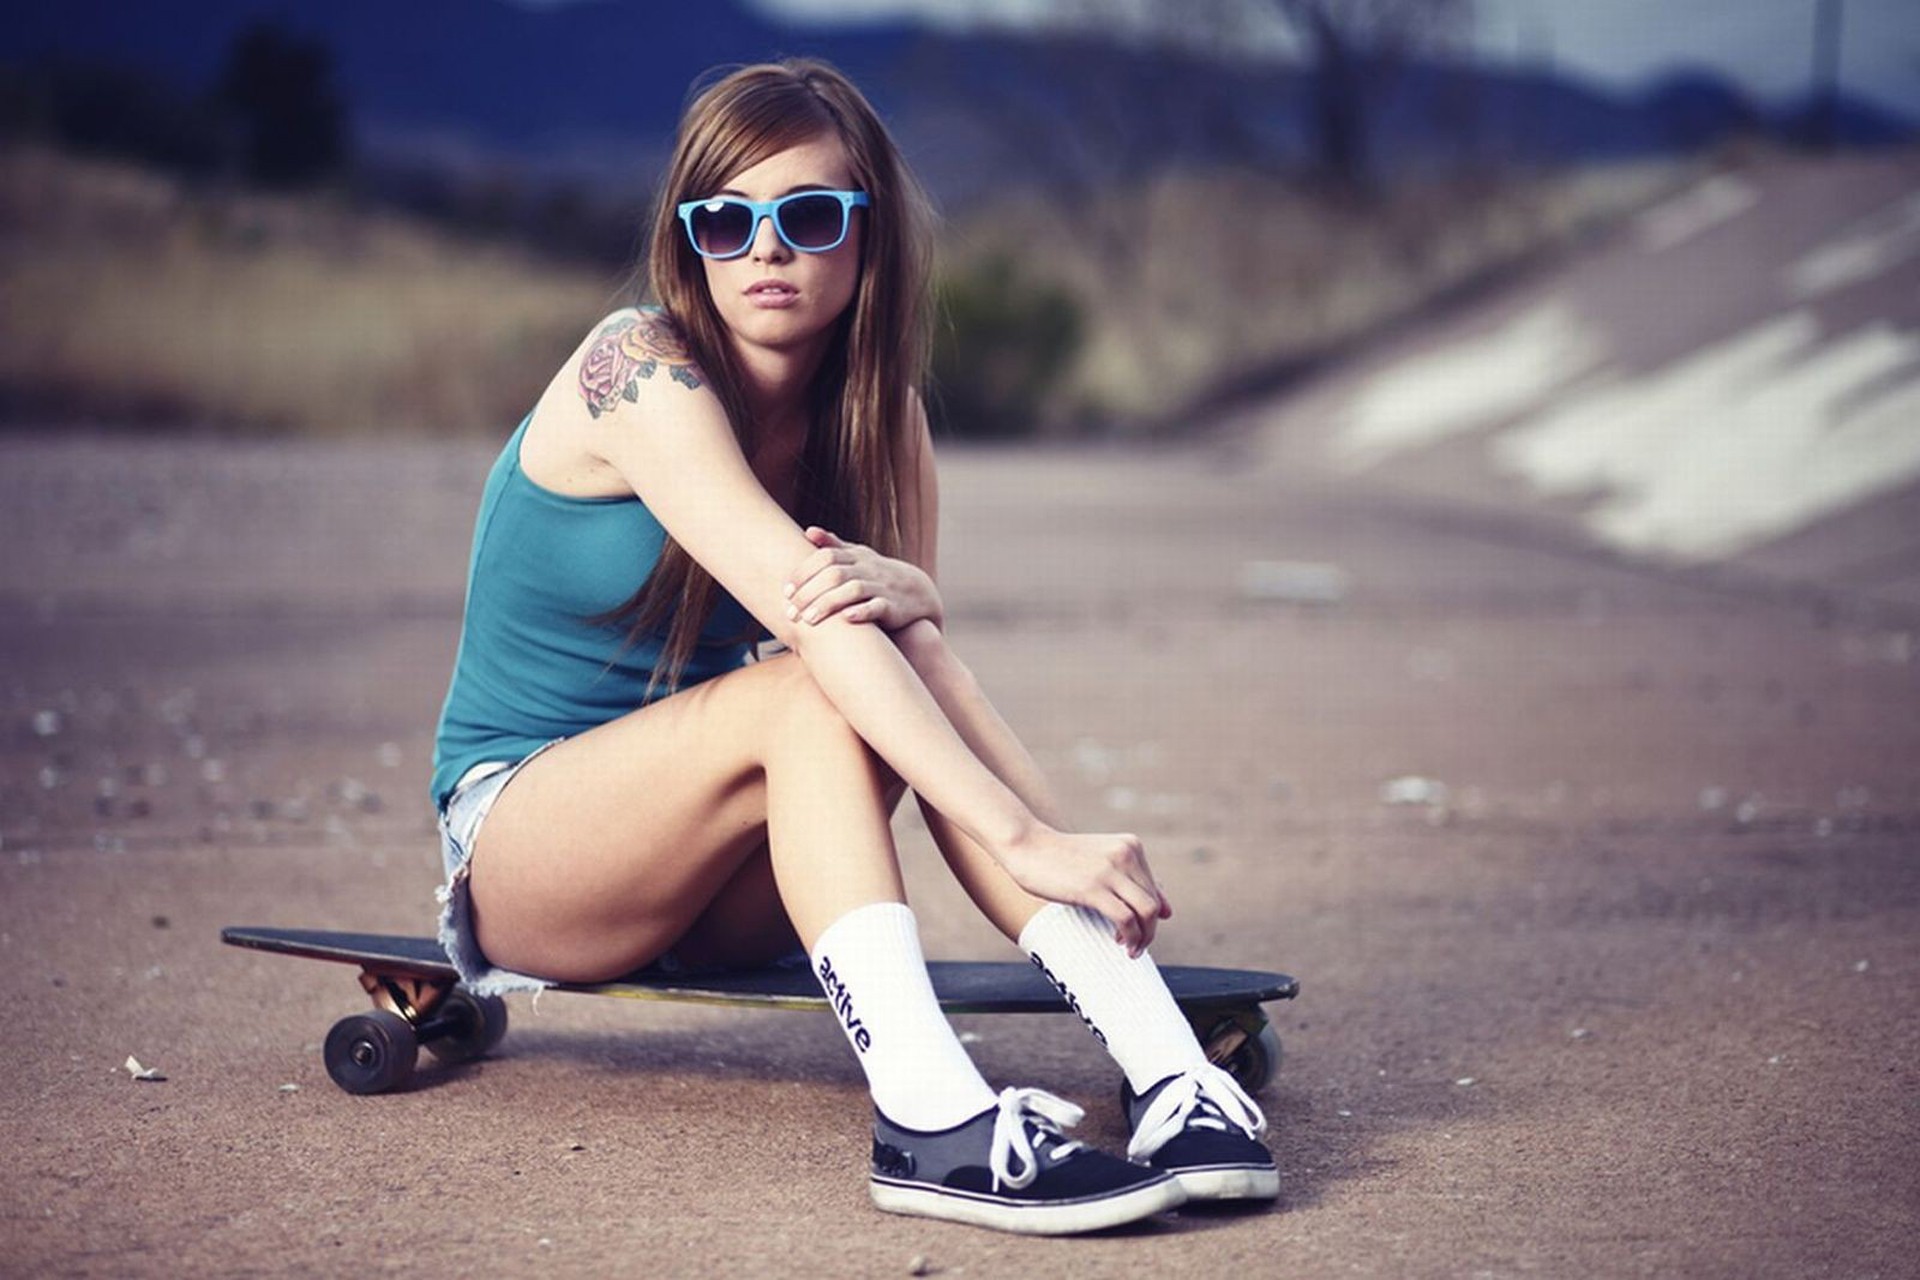 Girl Skateboard Company Wallpaper Girl With Skateboard And